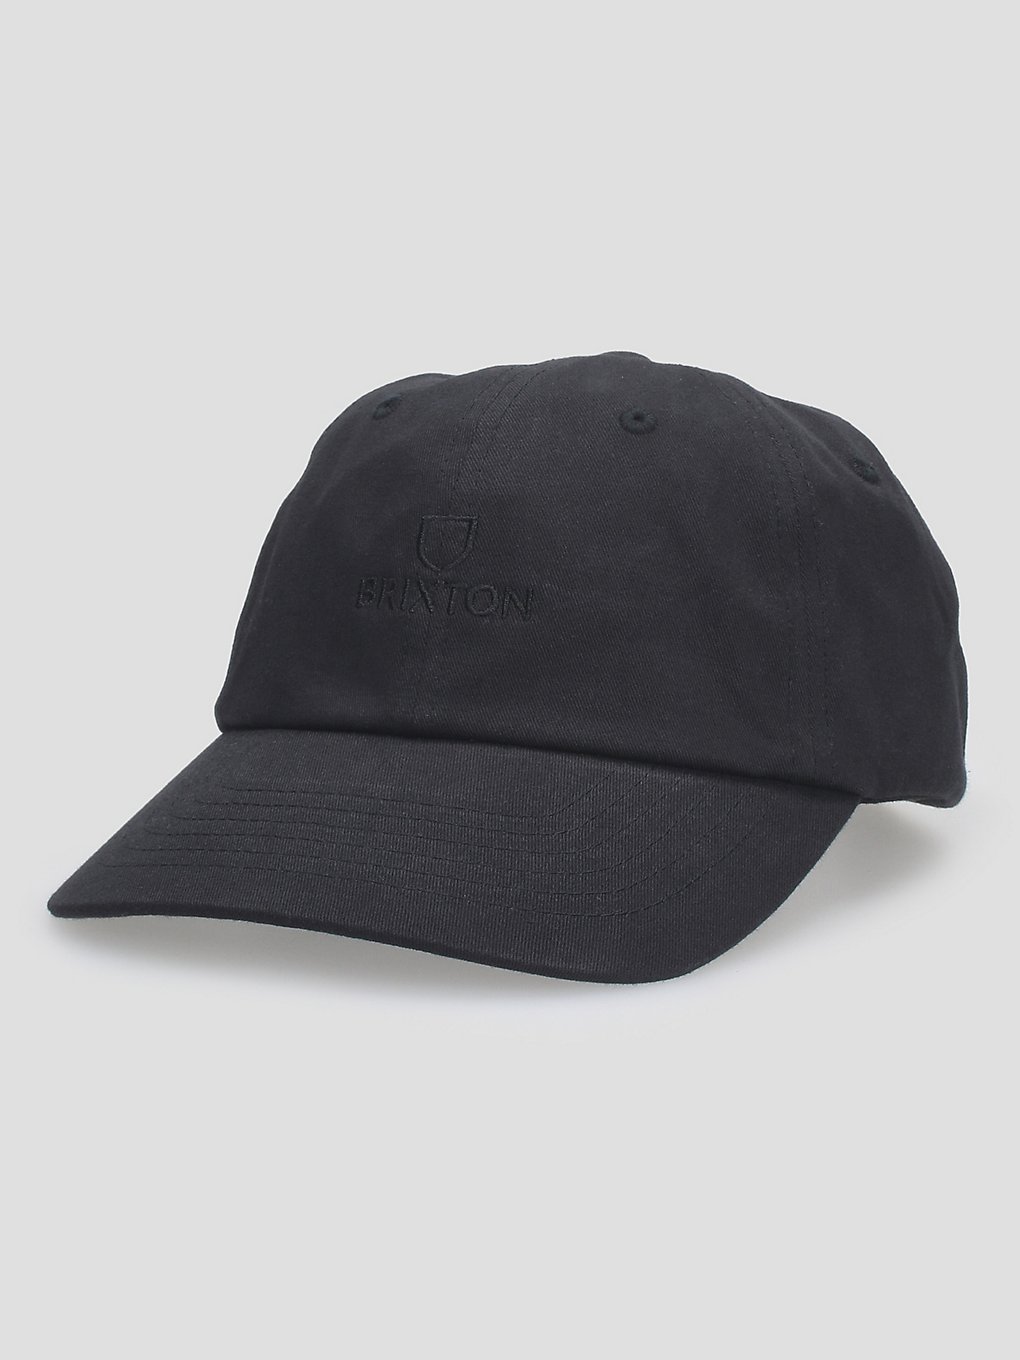 brixton cap - alpha lp adjustable hat - schwarz